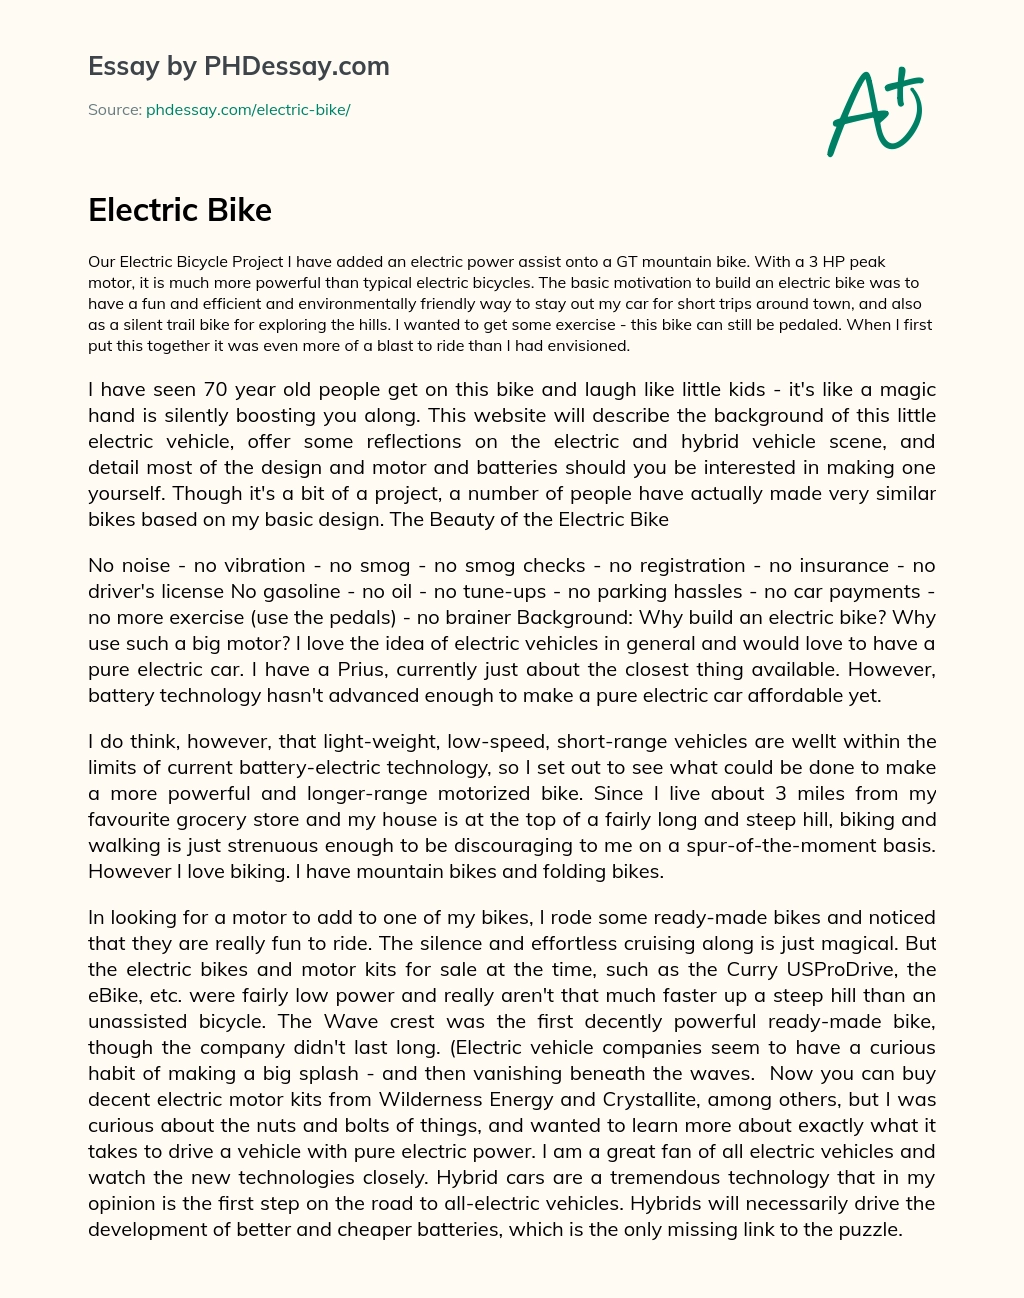 Electric Bike essay